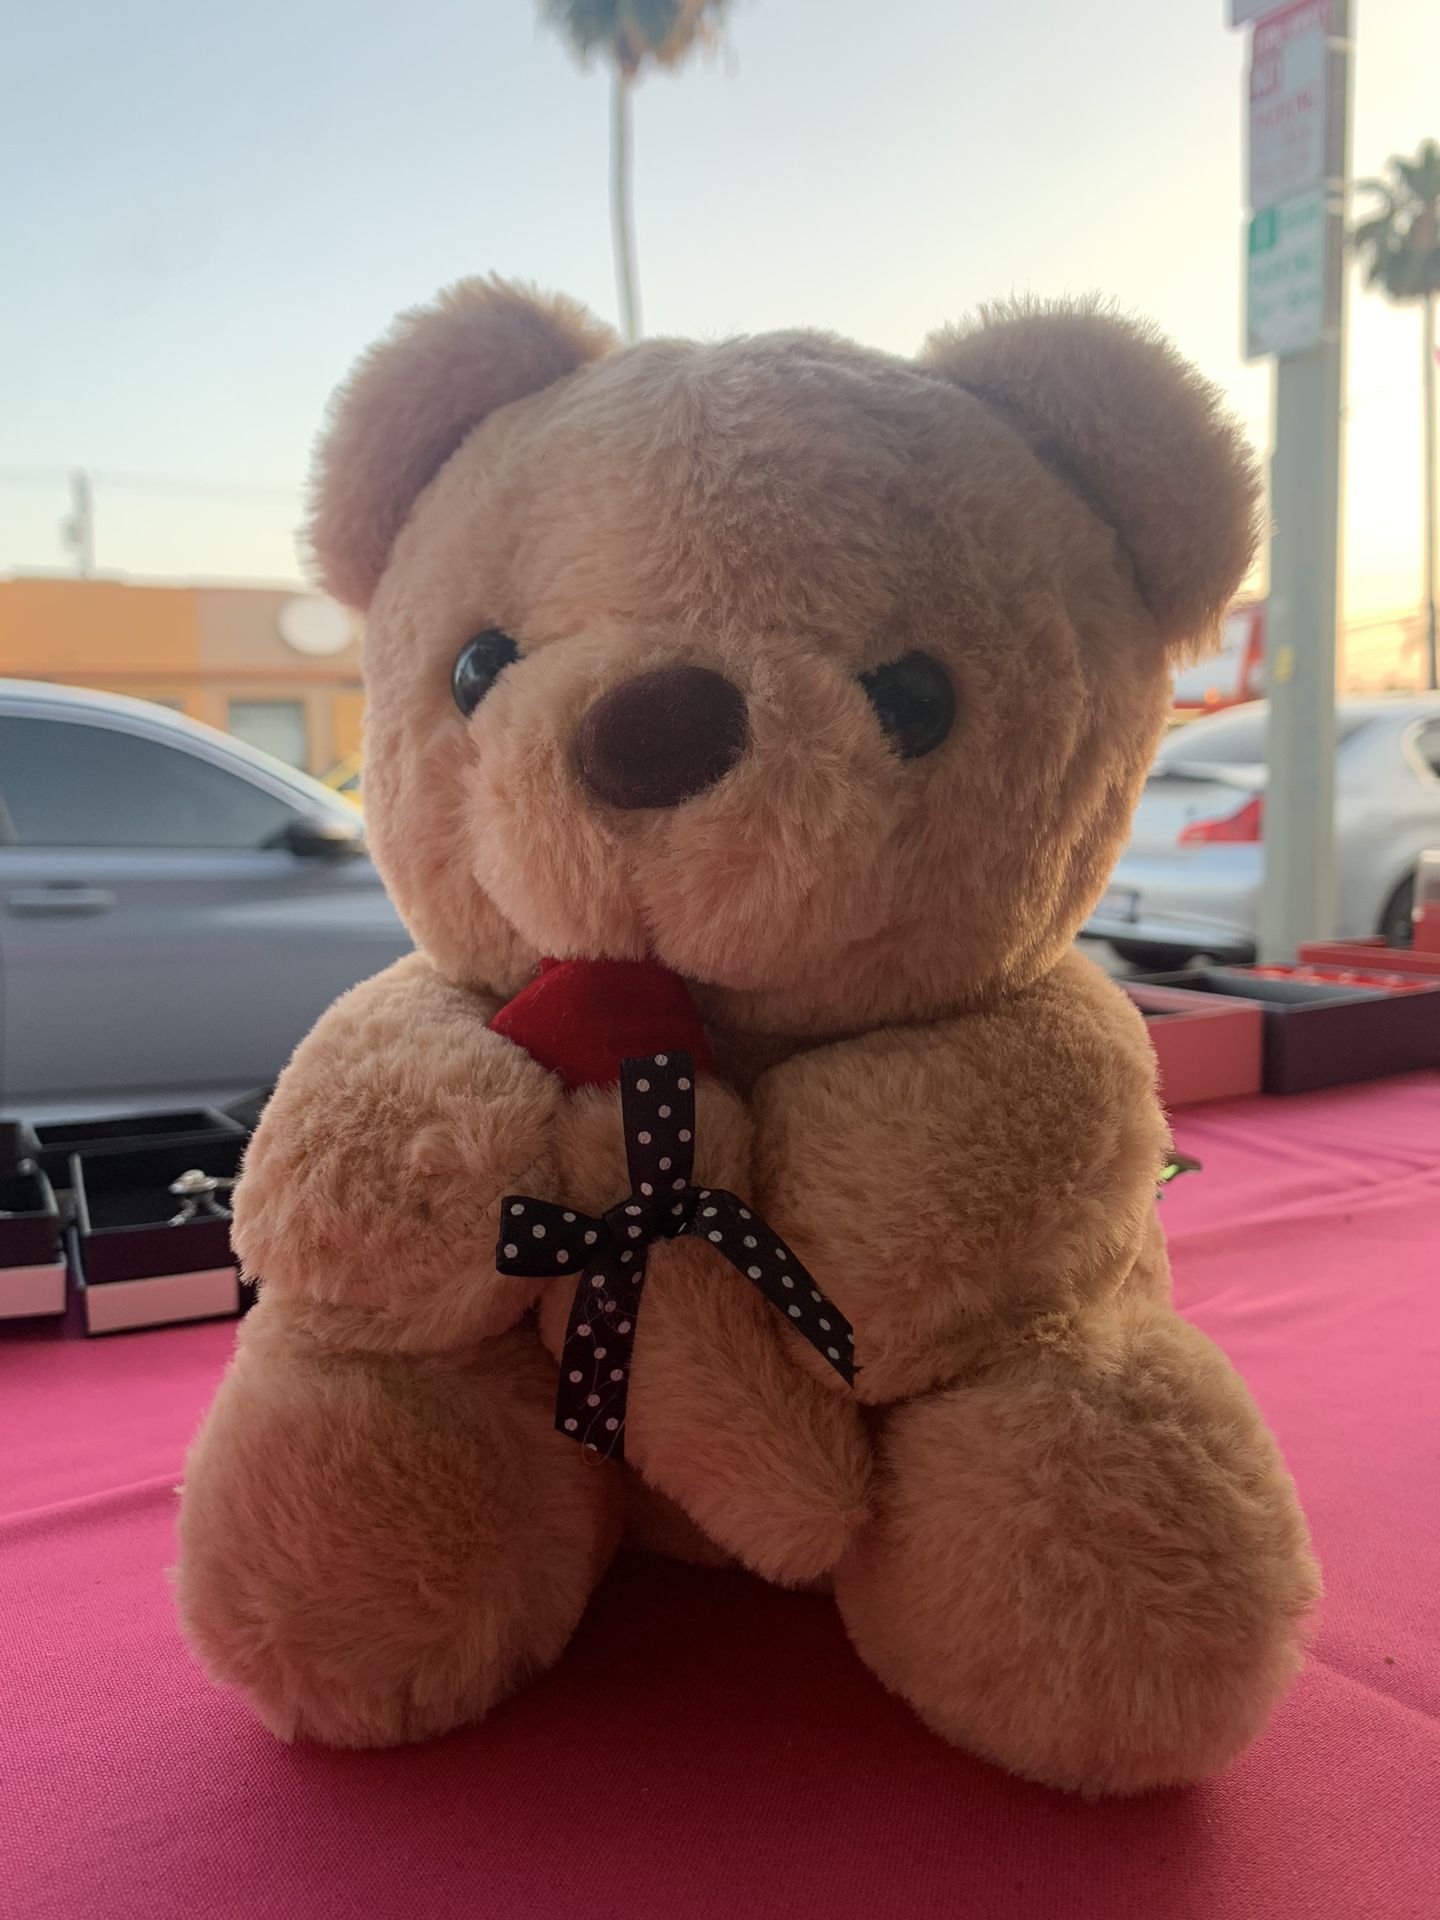 Gift For love One teddy bear 